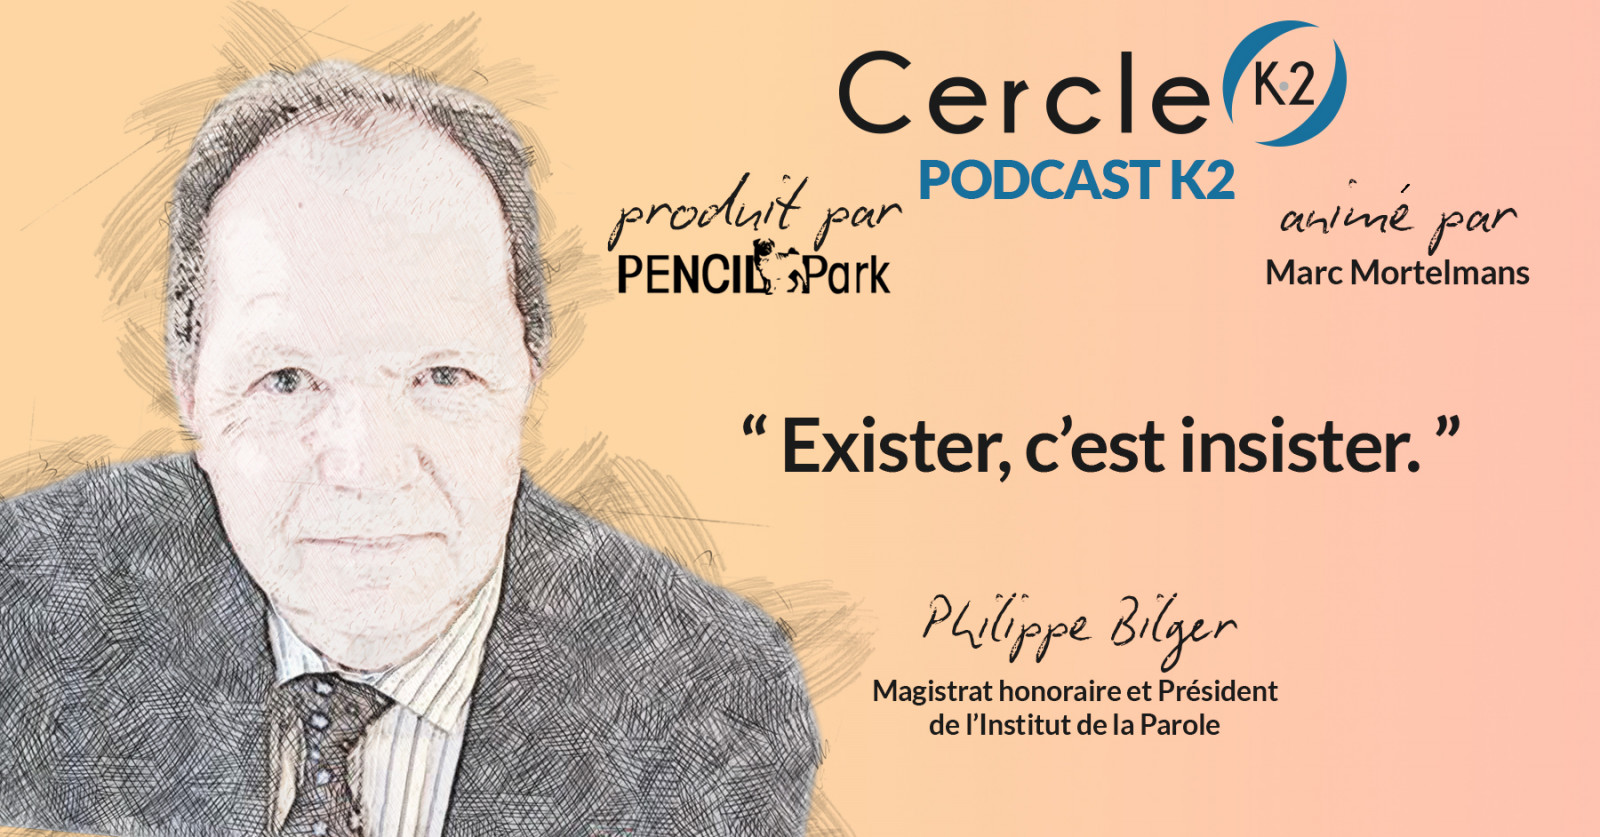 [Podcast K2] Episode 08 - Philippe Bilger - Cercle K2